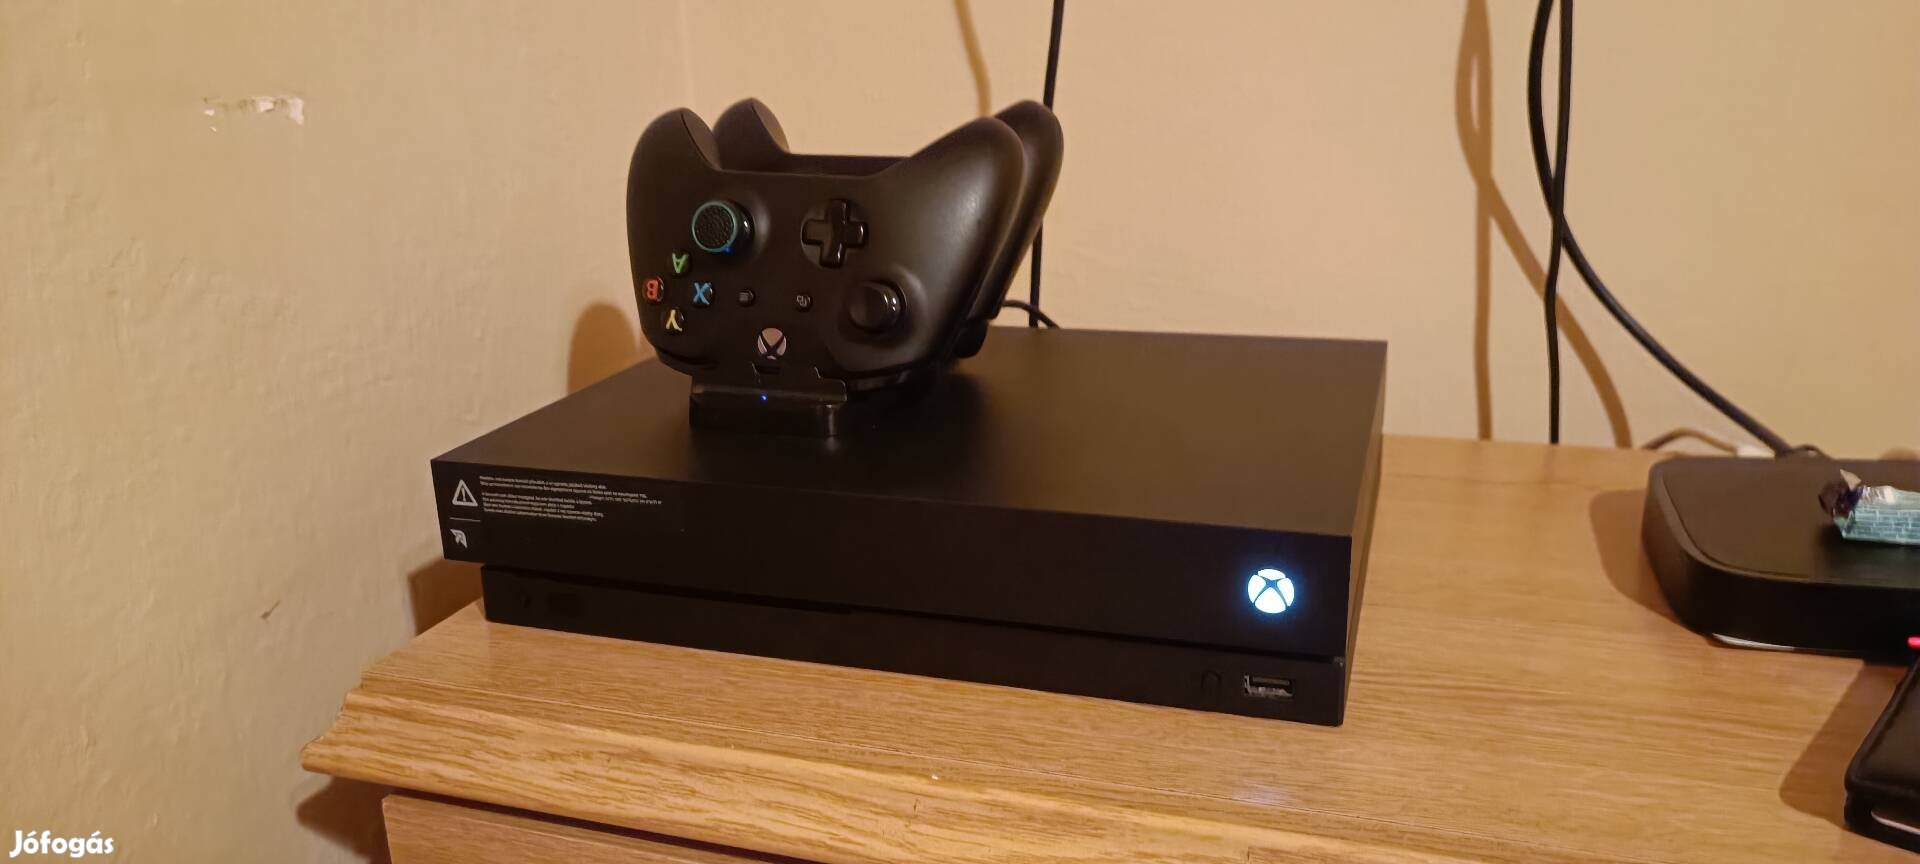 Xbox One X 2 karral